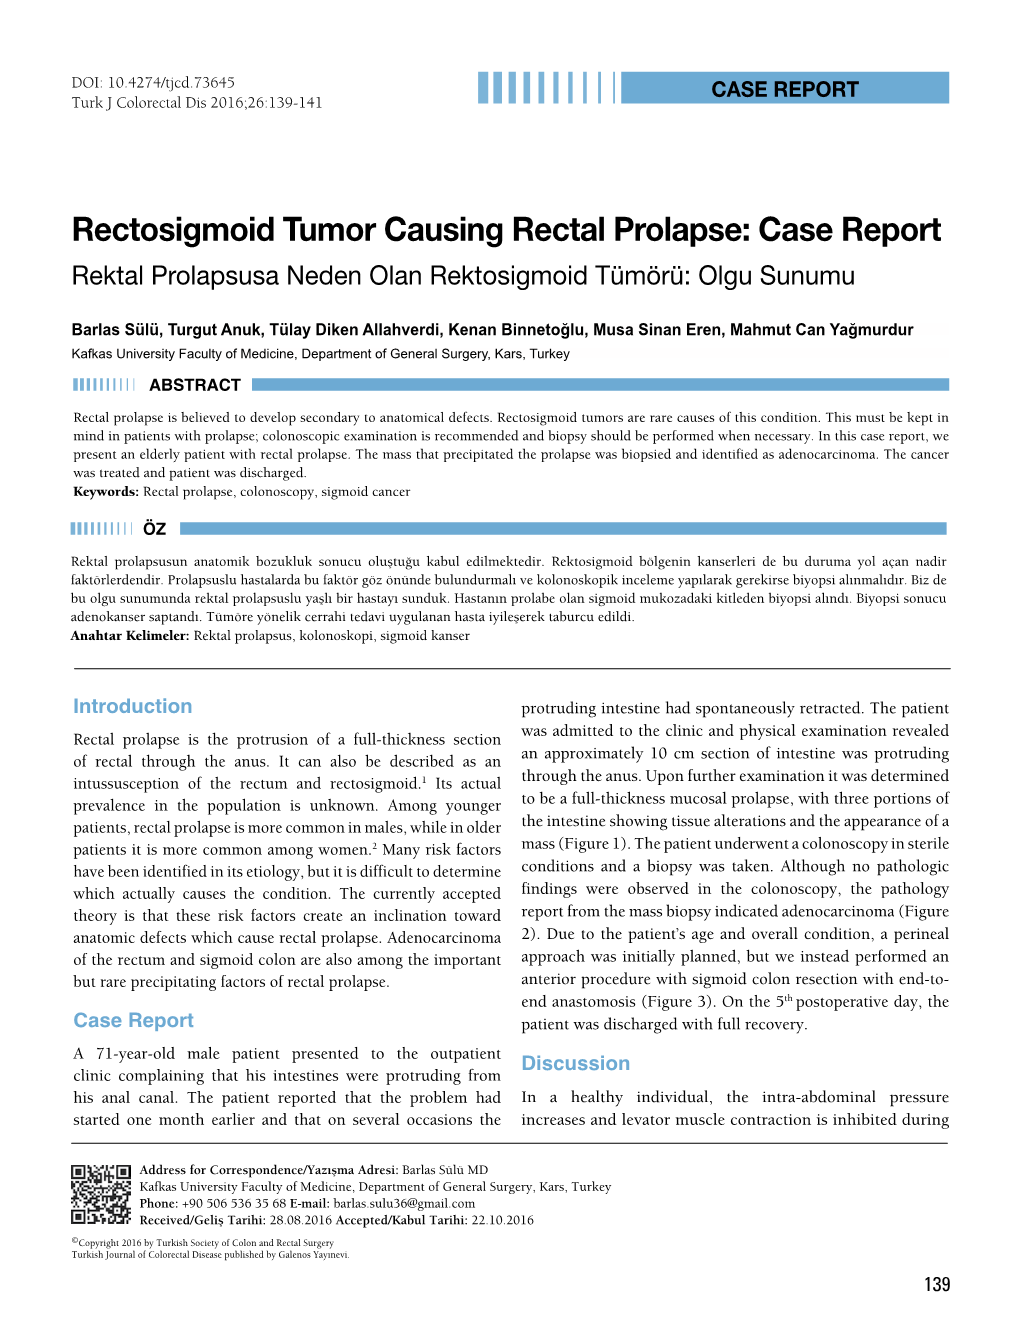 Rectosigmoid Tumor Causing Rectal Prolapse: Case Report Rektal Prolapsusa Neden Olan Rektosigmoid Tümörü: Olgu Sunumu